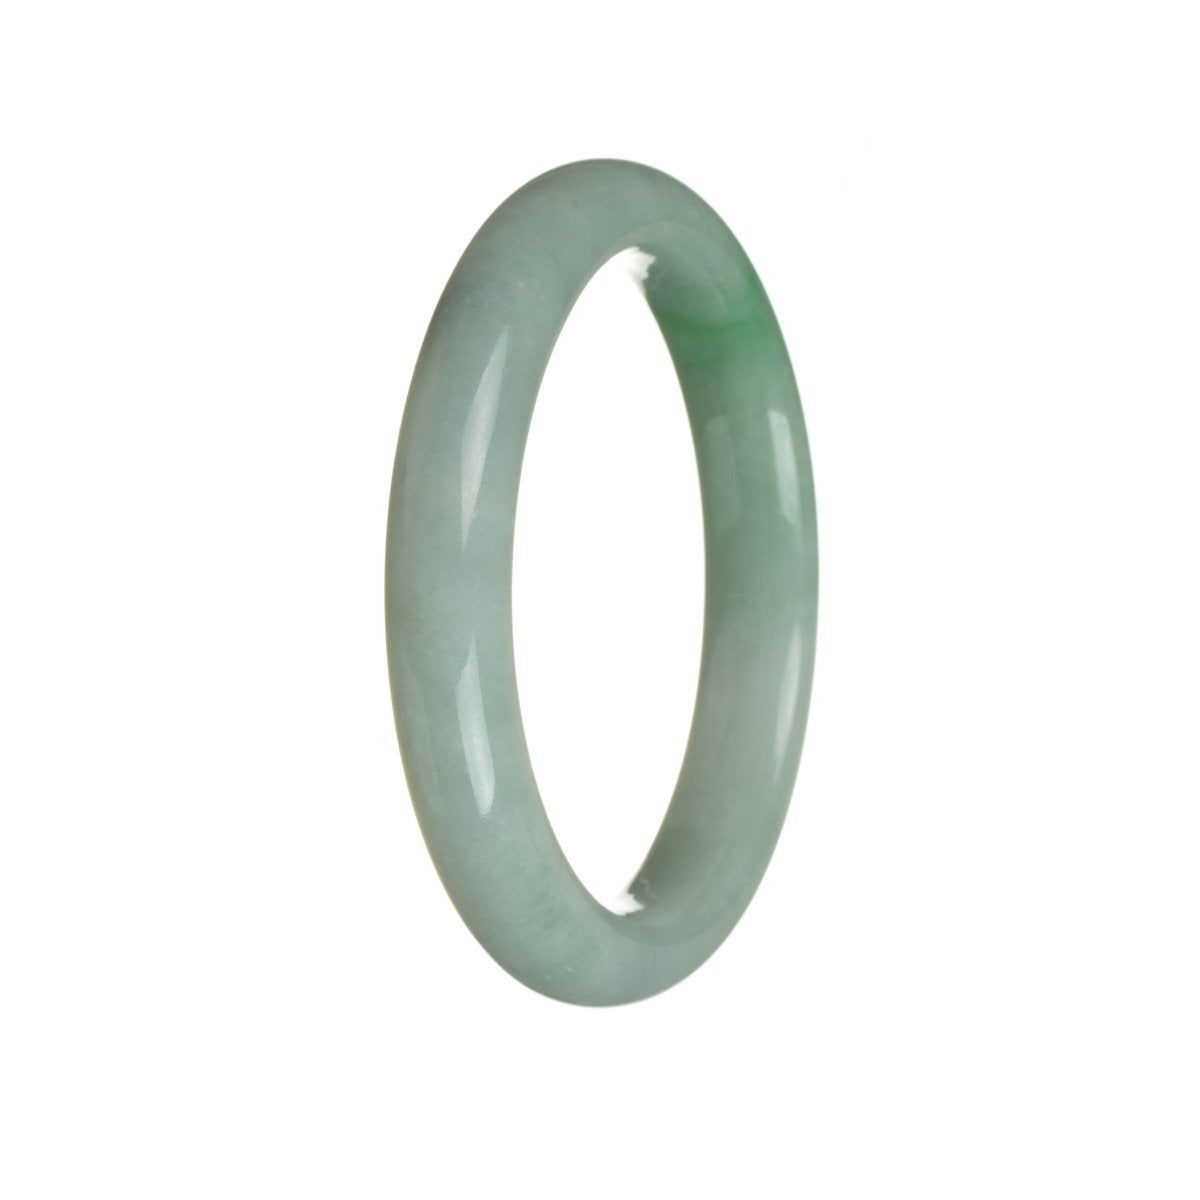 Genuine Grade A Green Jadeite Bangle - 62mm Half Moon